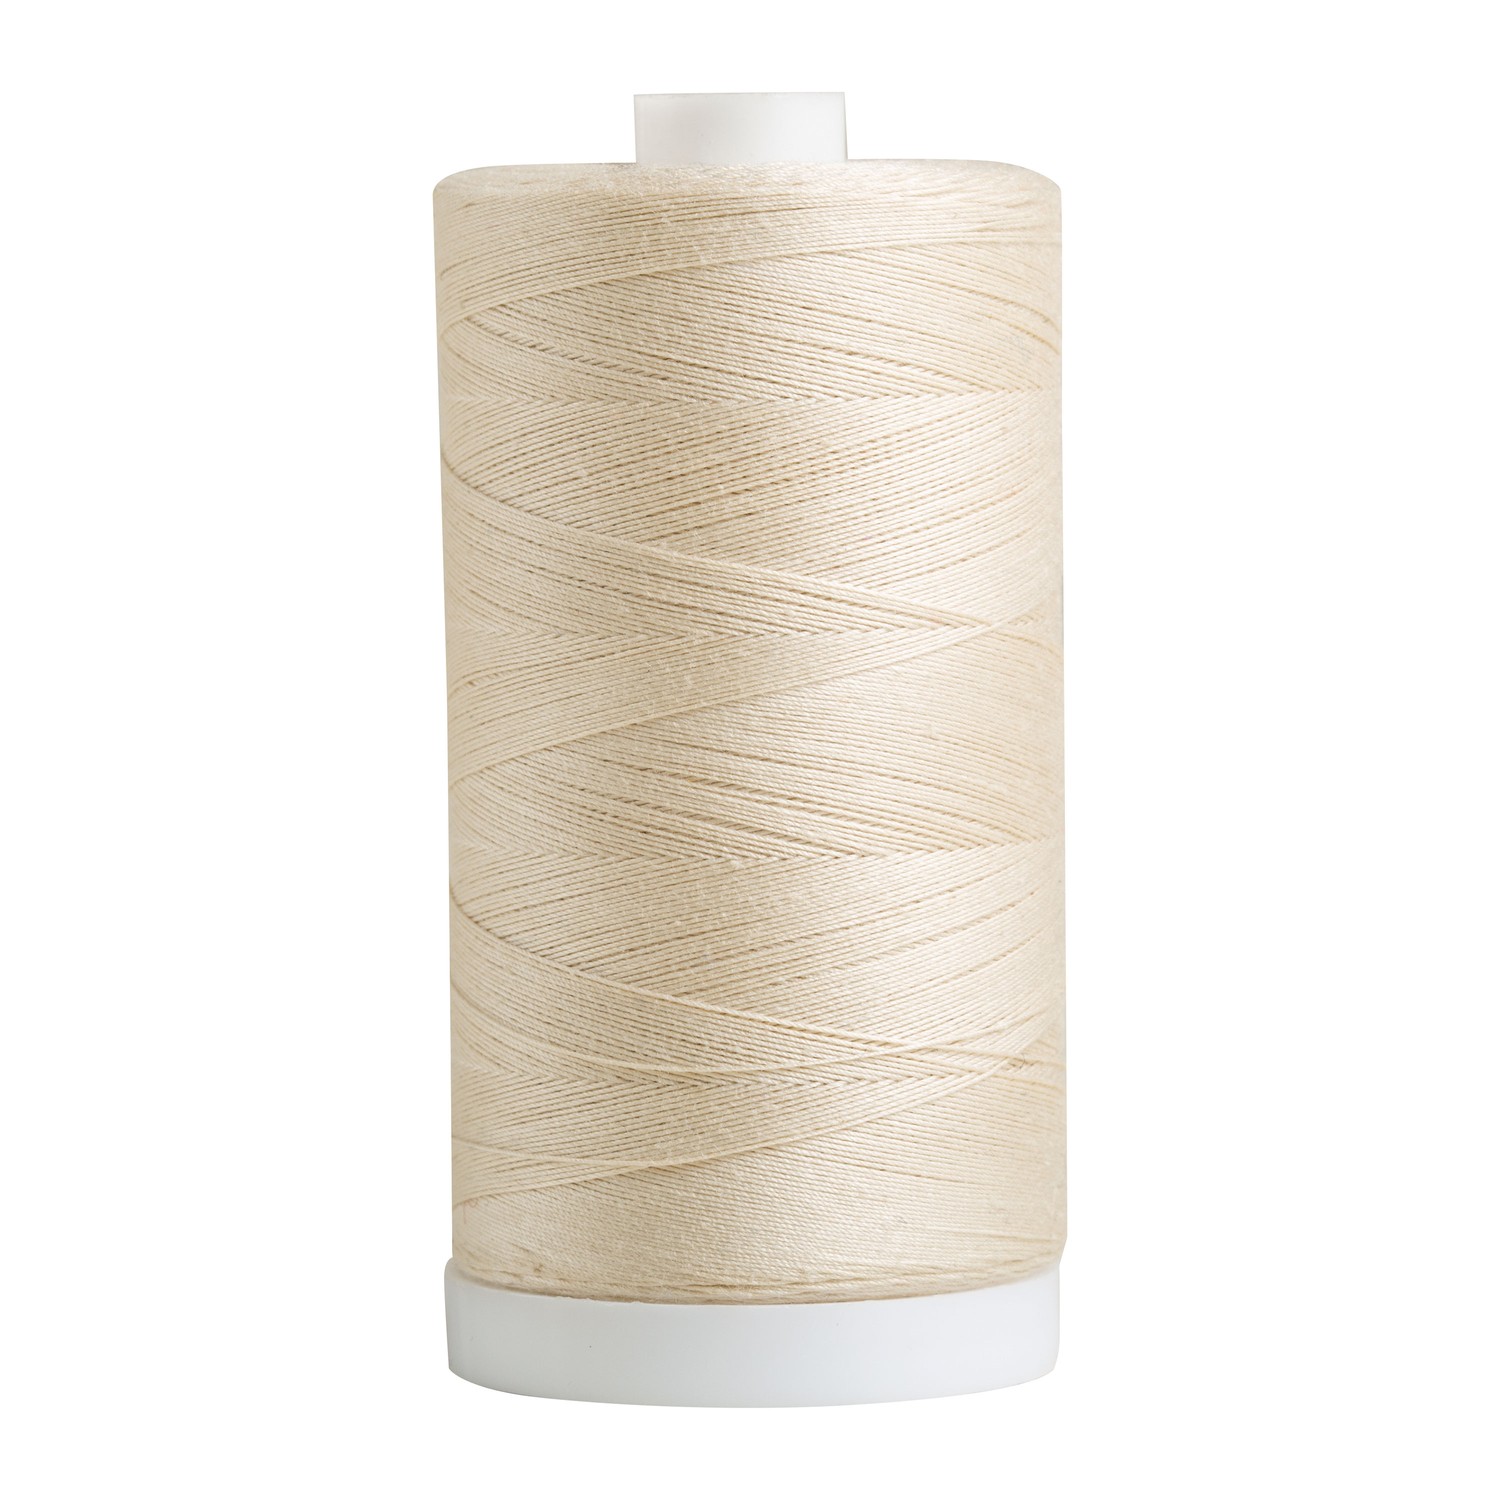 Essential Quilting Thread in White